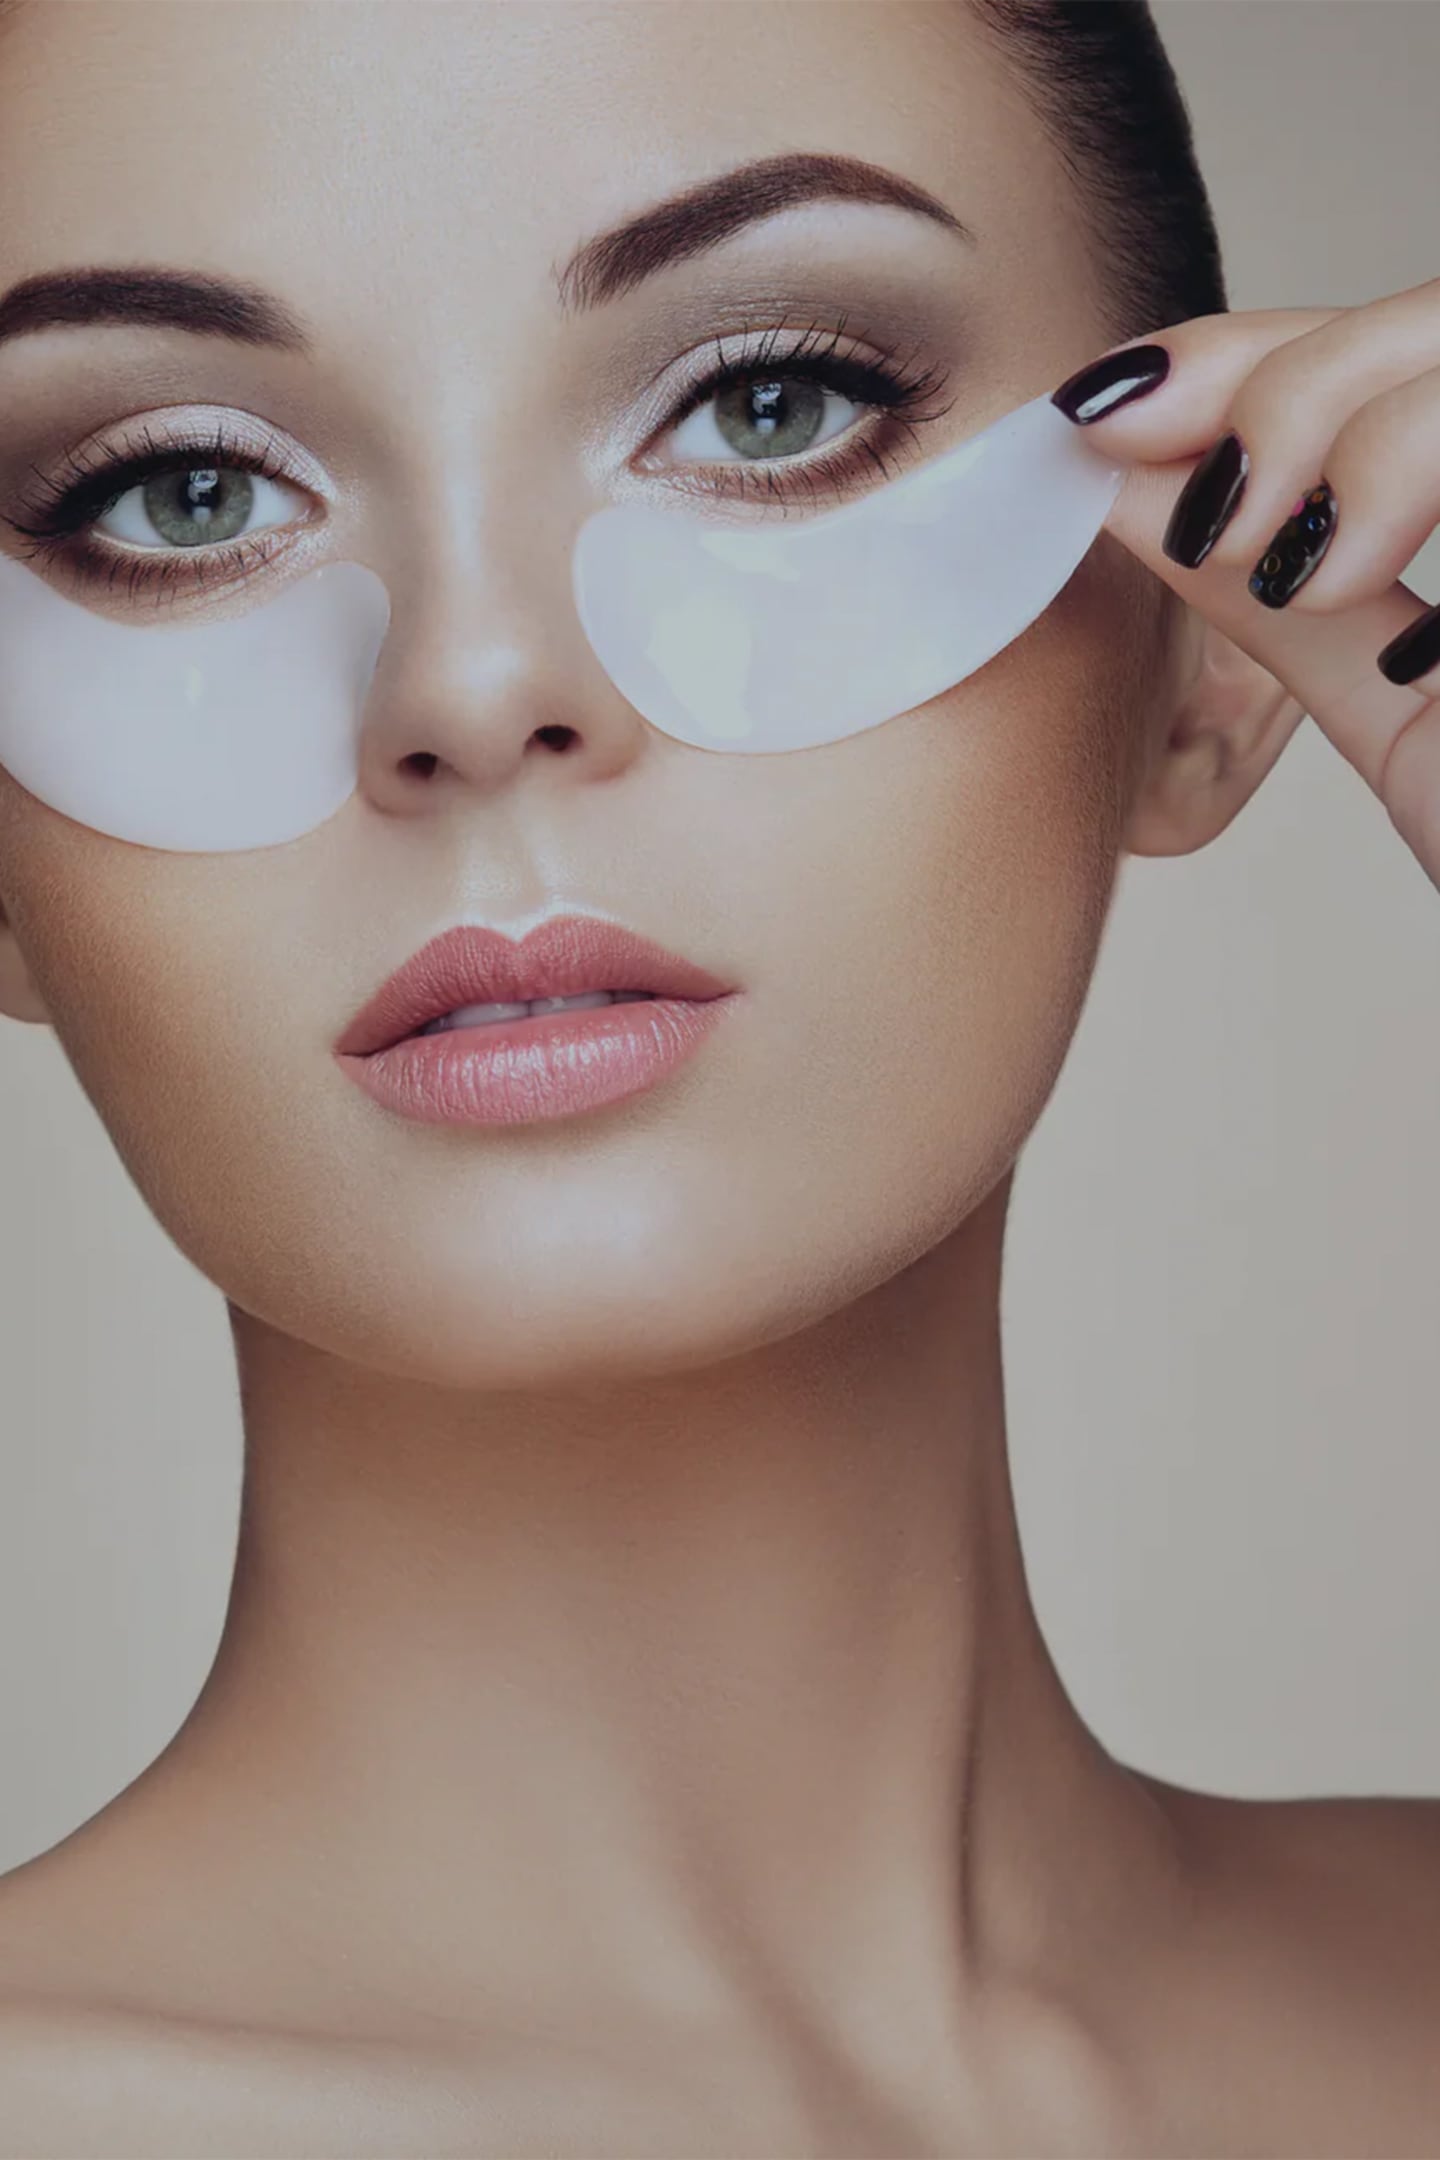 A model trialling a reusable eye mask